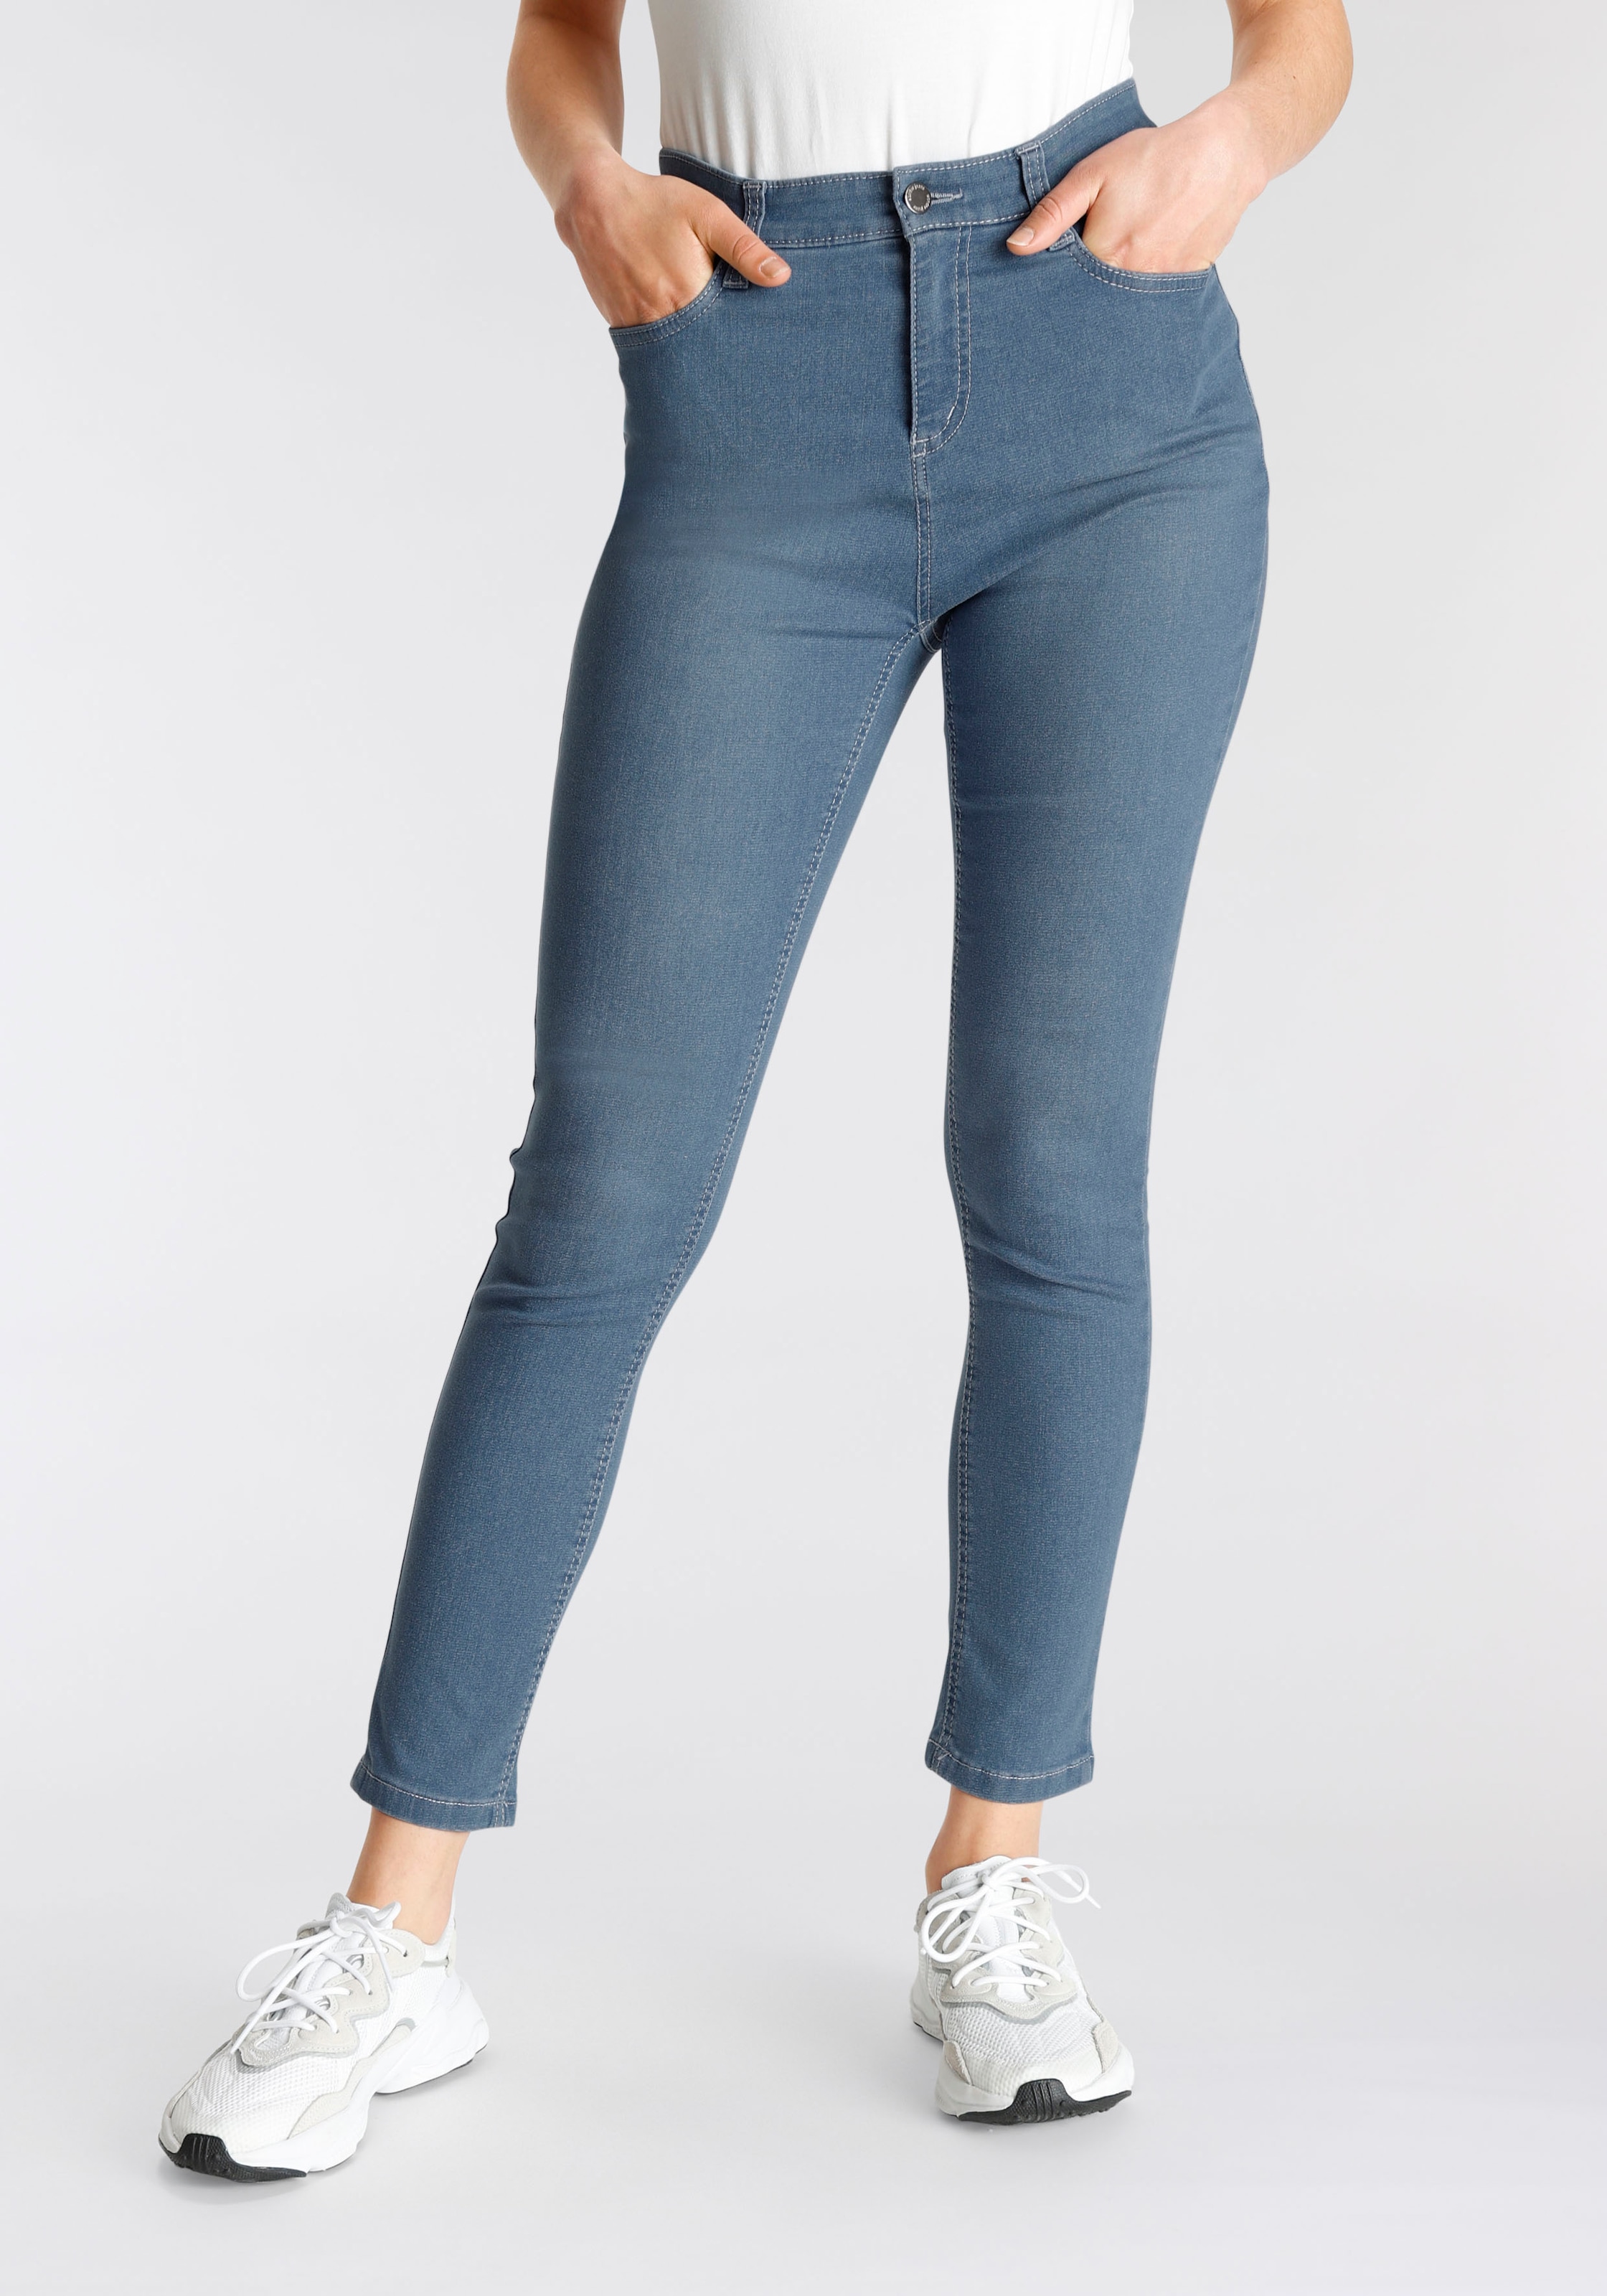 bei High-waist-Jeans OTTOversand wonderjeans